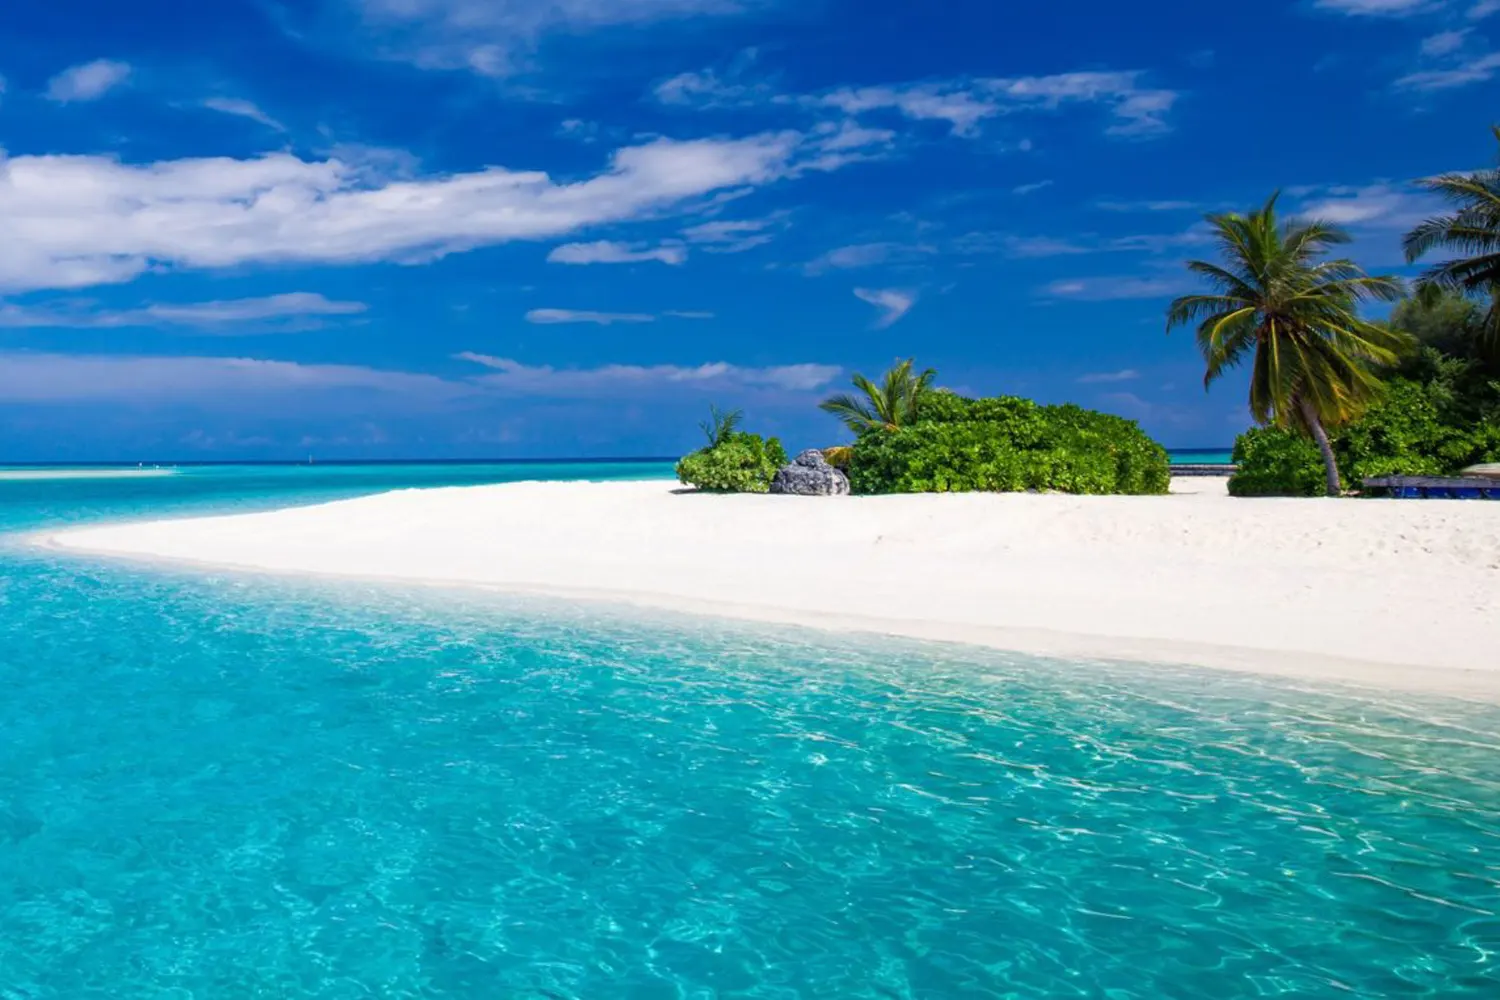 9 days Zanzibar beach holiday tour package